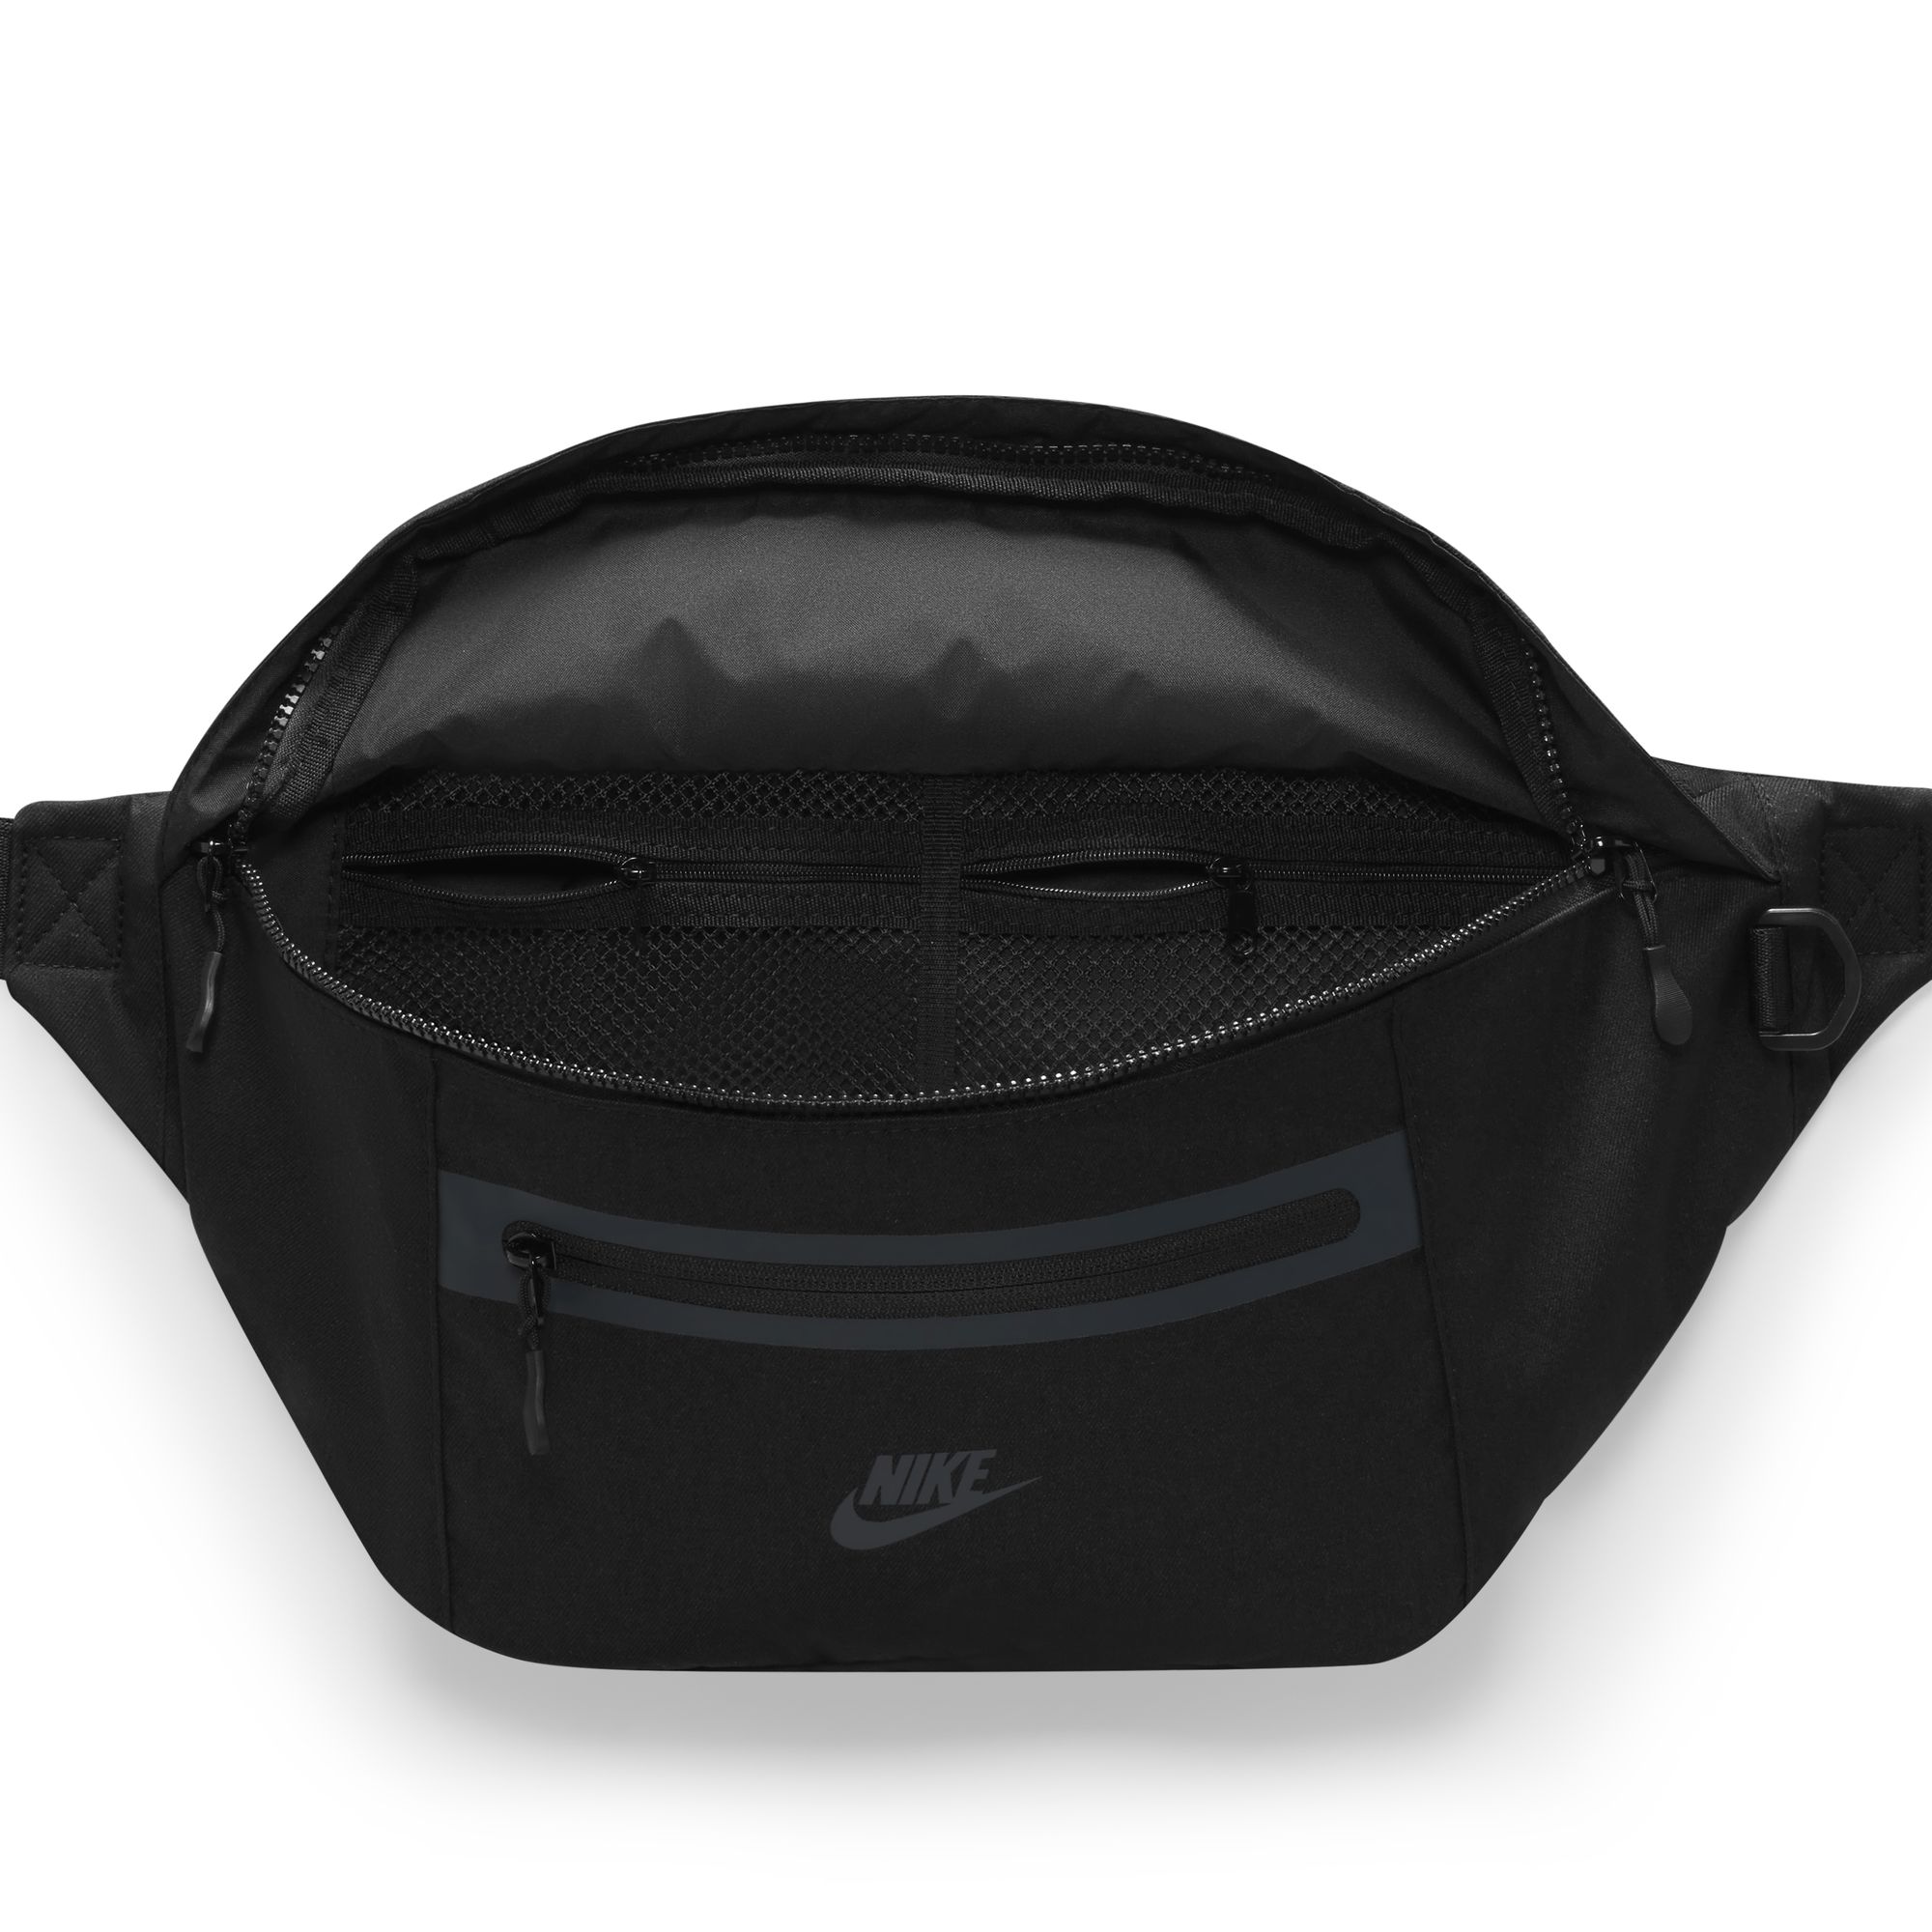 Nike Elemental Premium Bag Black 04